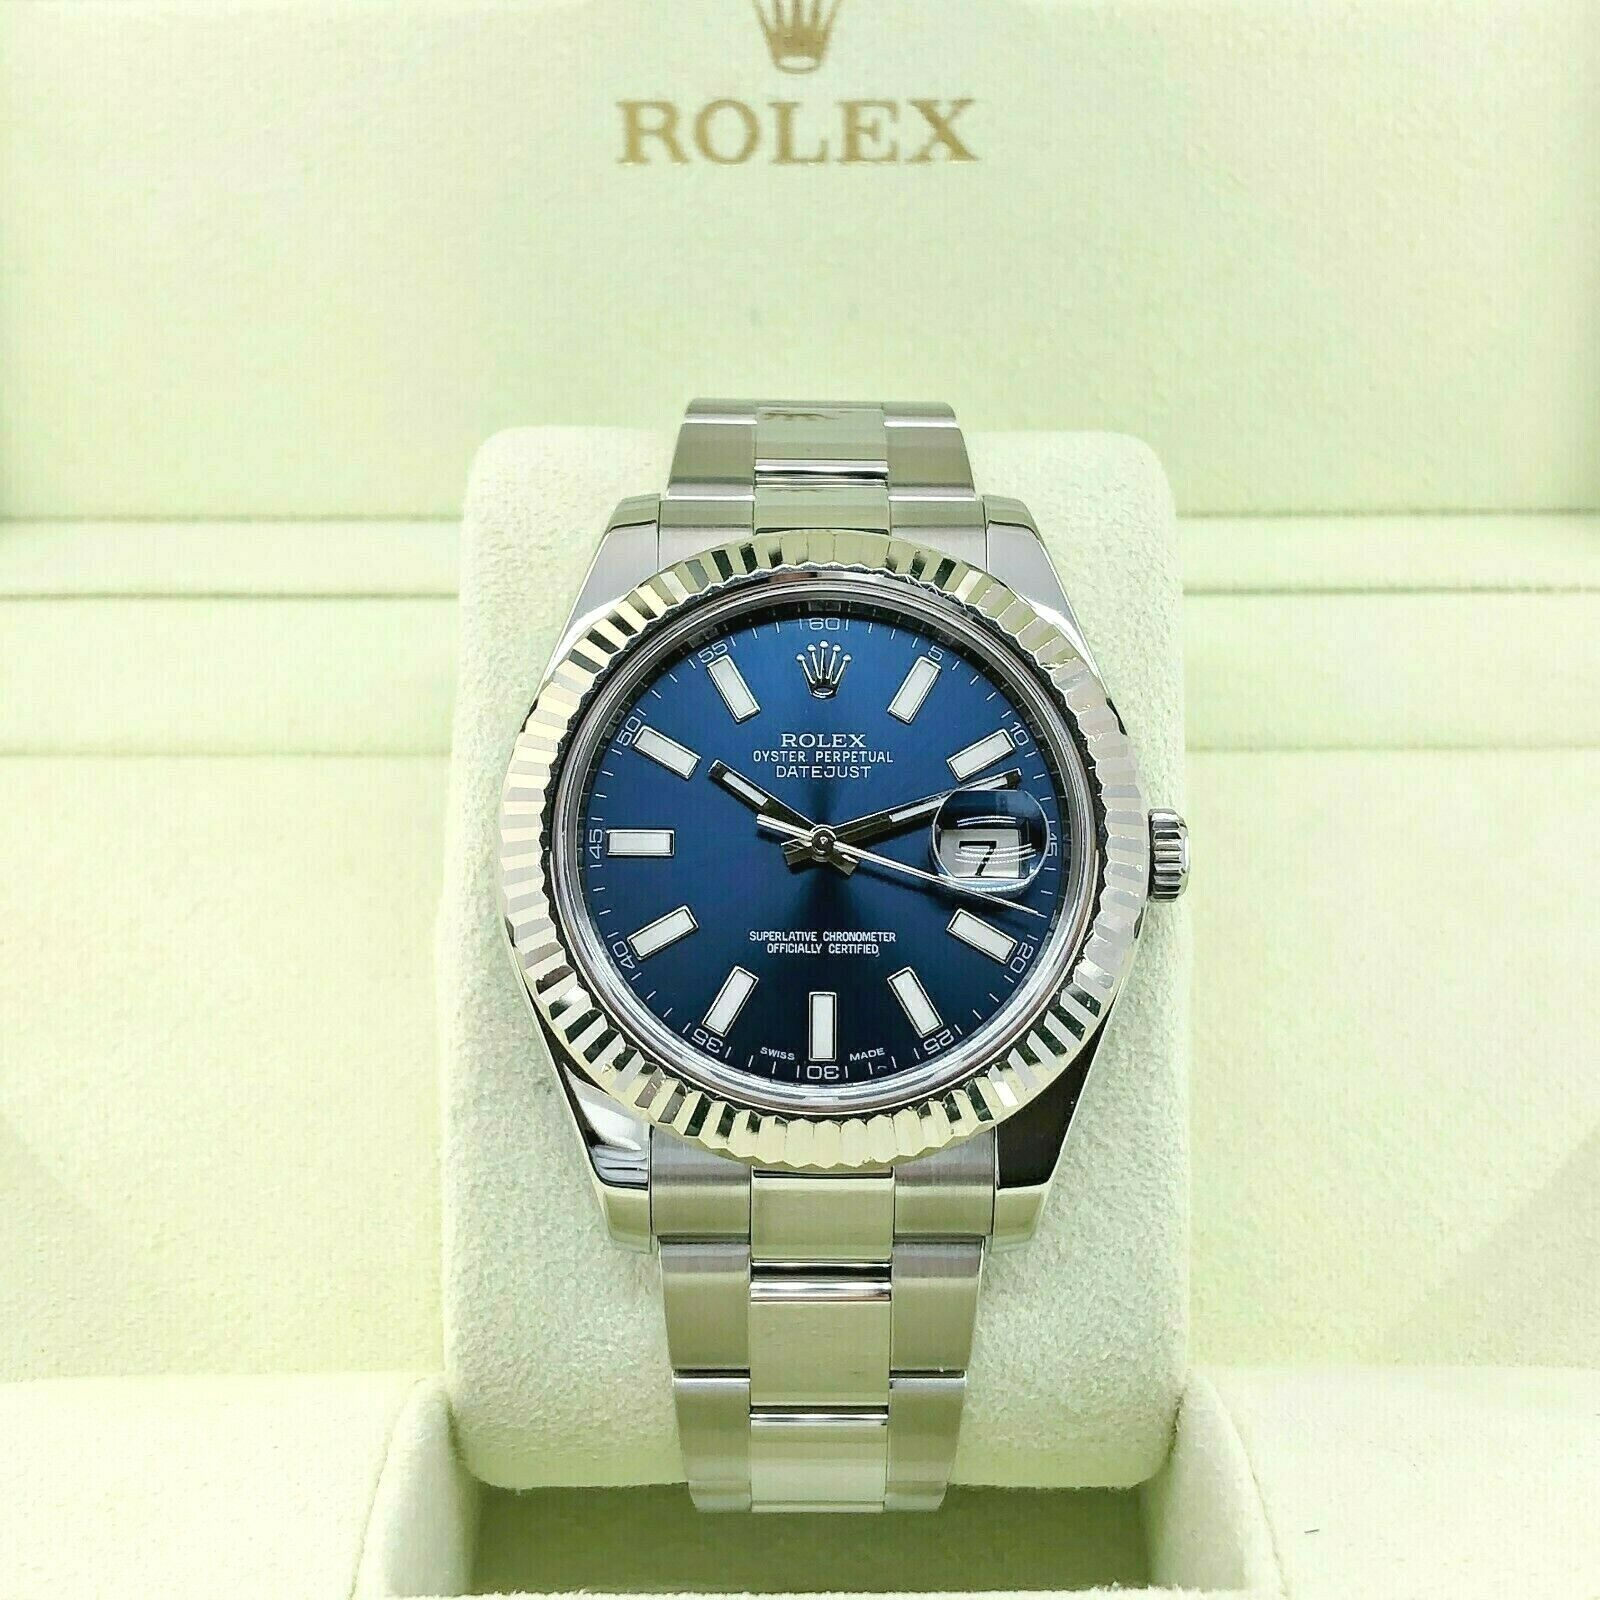 Rolex 41MM Datejust II Watch 18K Gold Fluted Bezel Stainless Steel Ref 116334